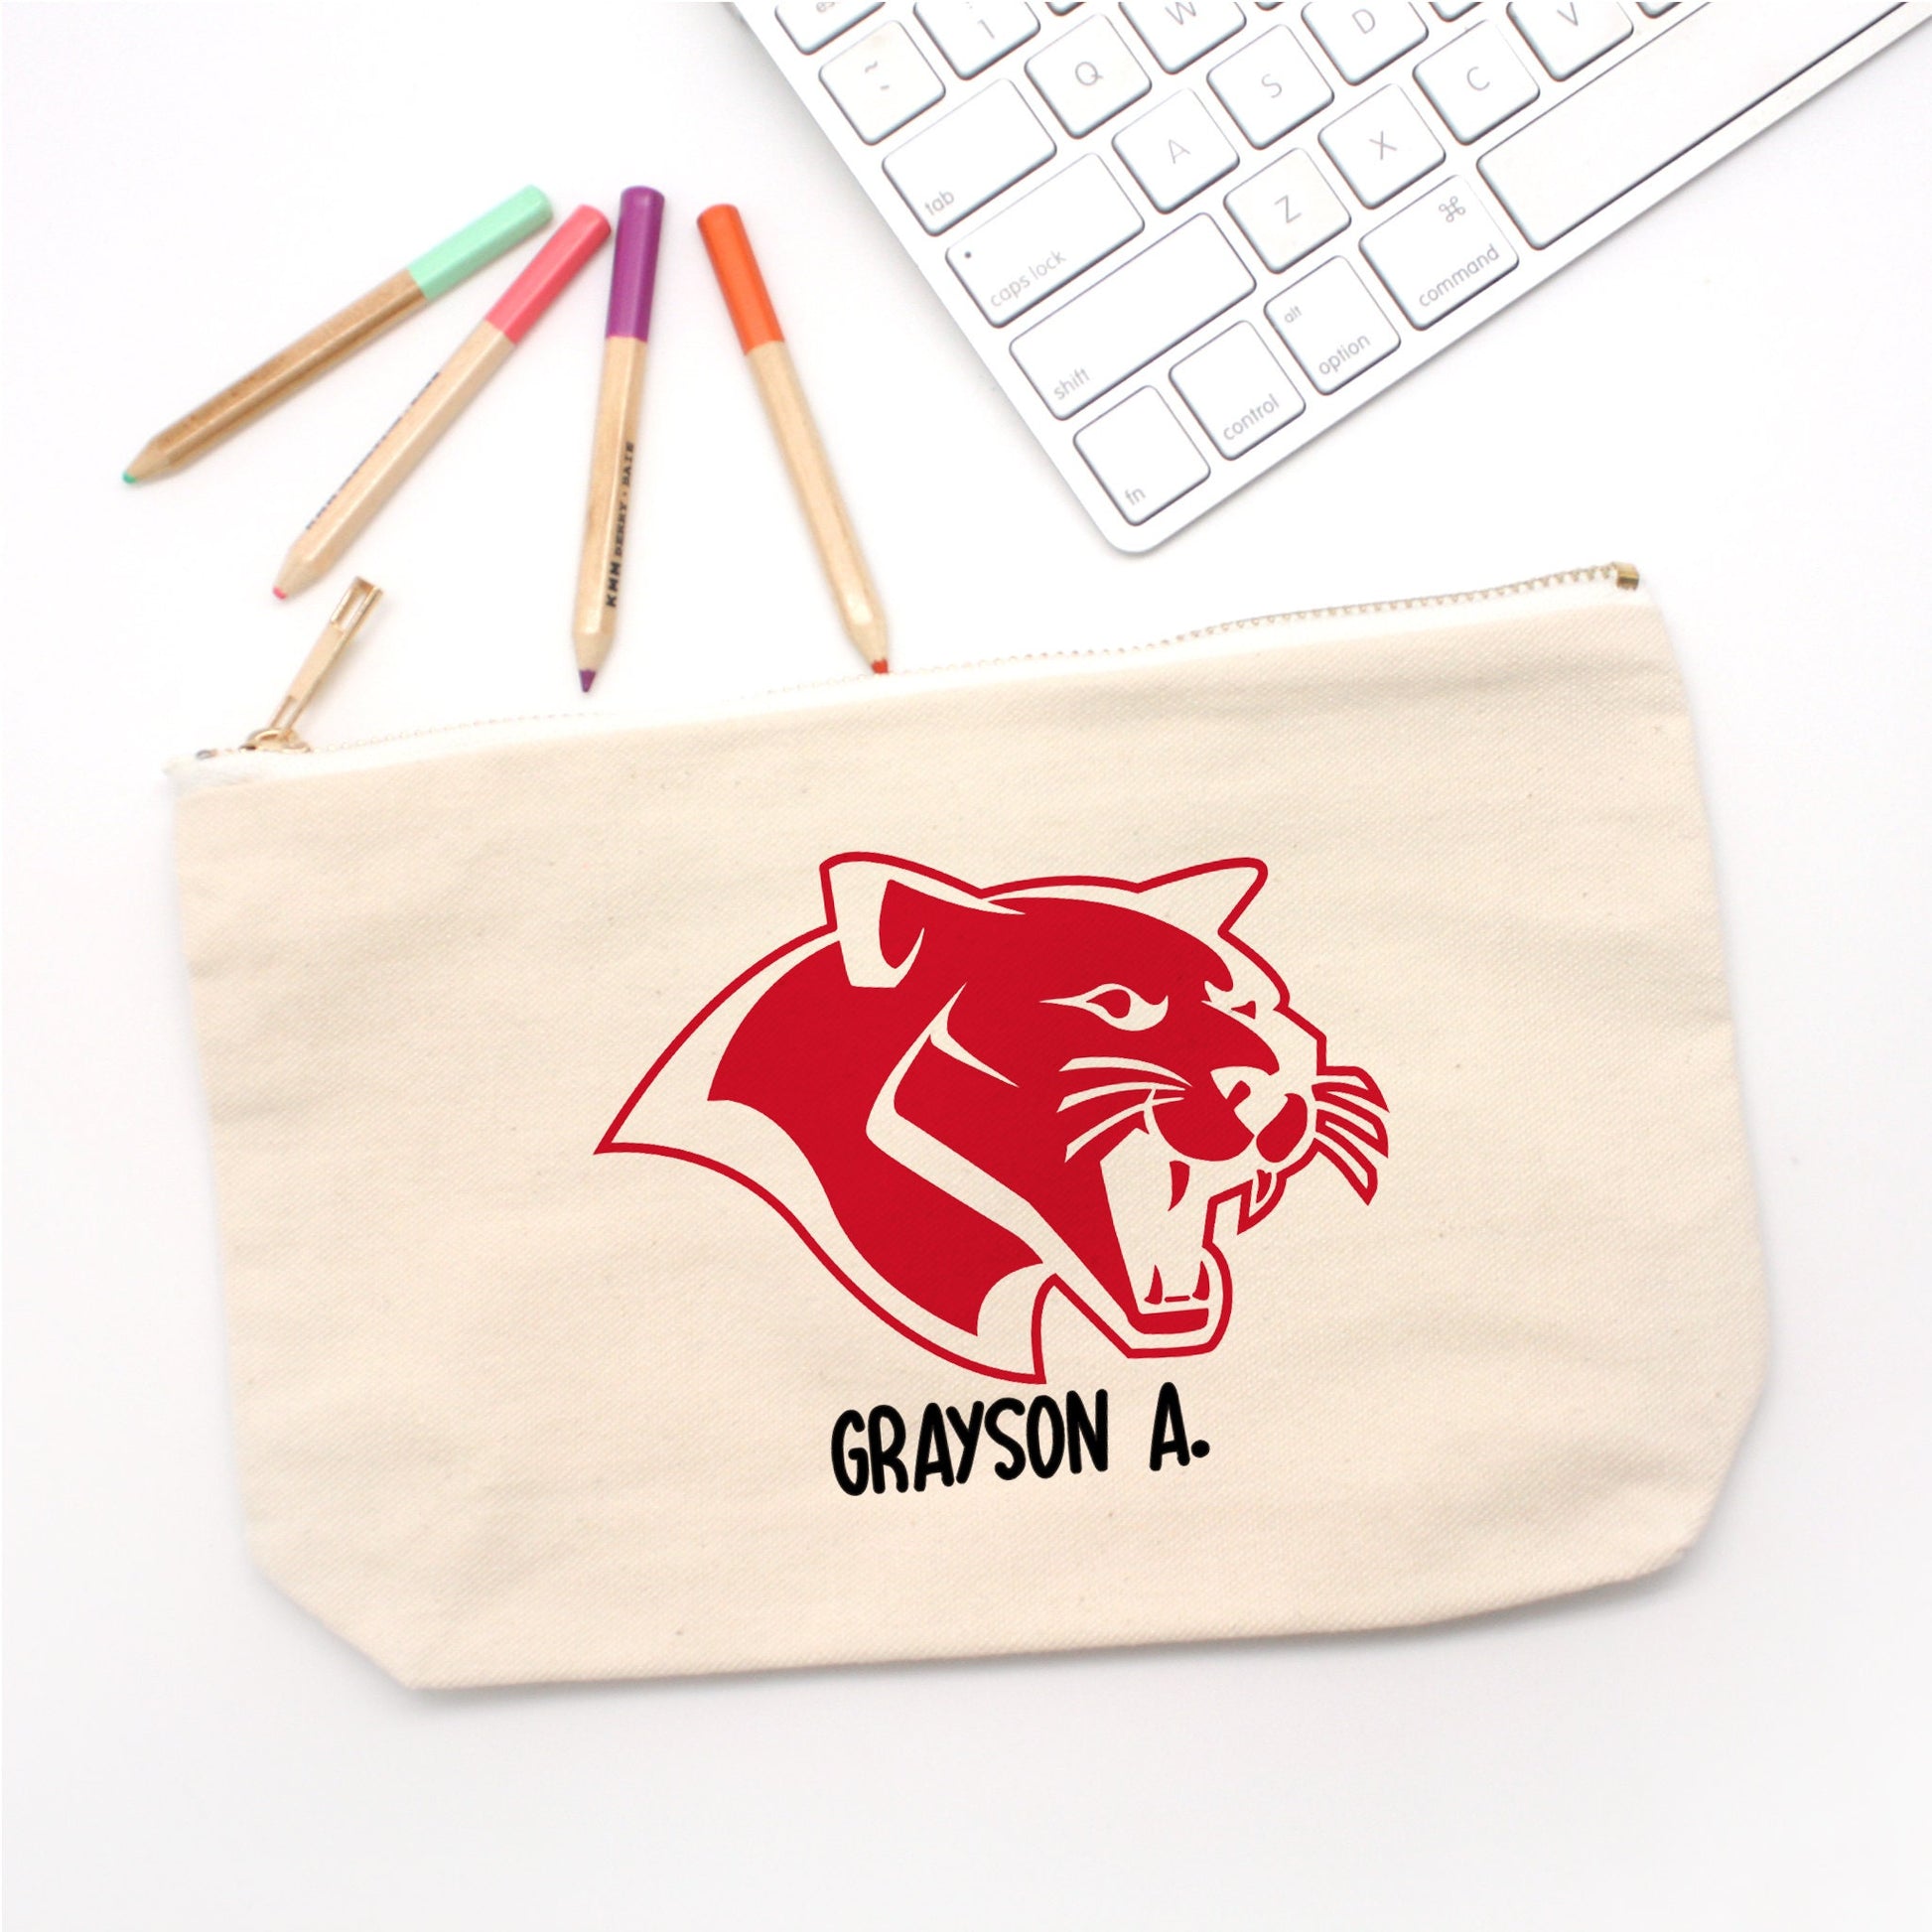 Personalized School Mascot Pencil Bag - Canvas Penicil Bag - Personalized Pencil Bag - Teacher Gift - Personalized Gift for Teachers